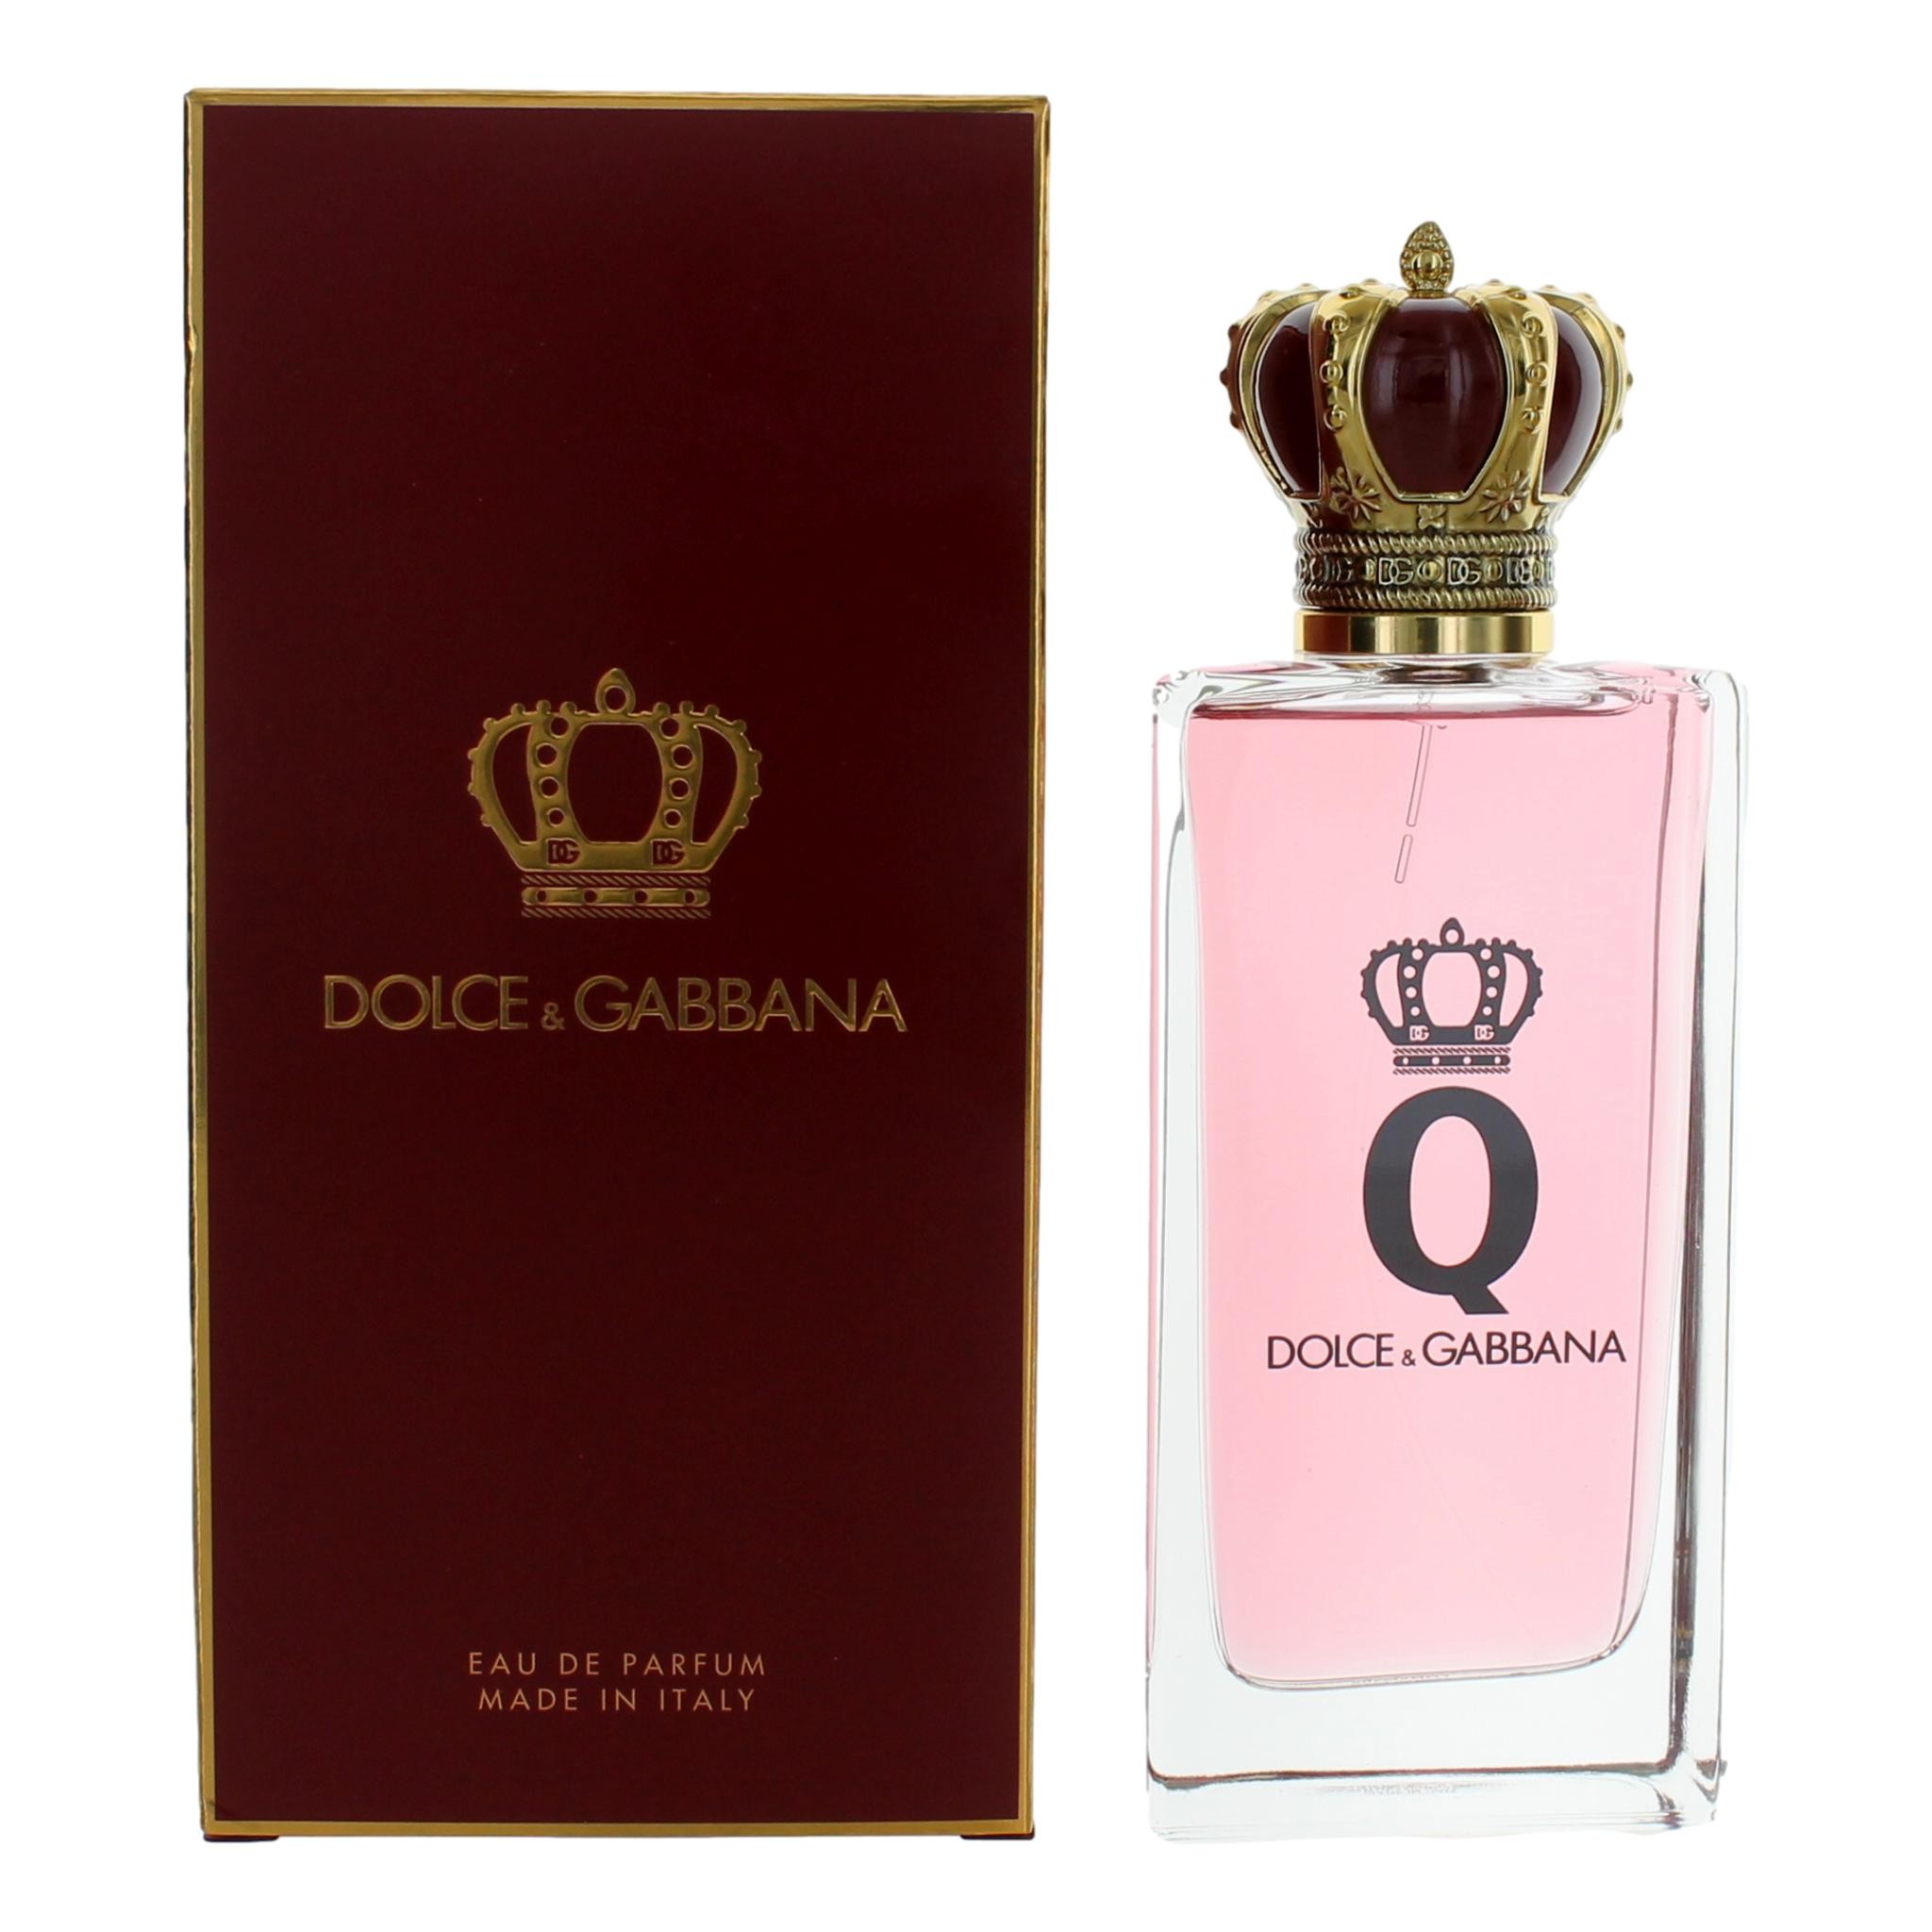 Q by Dolce & Gabbana 3.4 oz Eau de Parfum Spray for Women